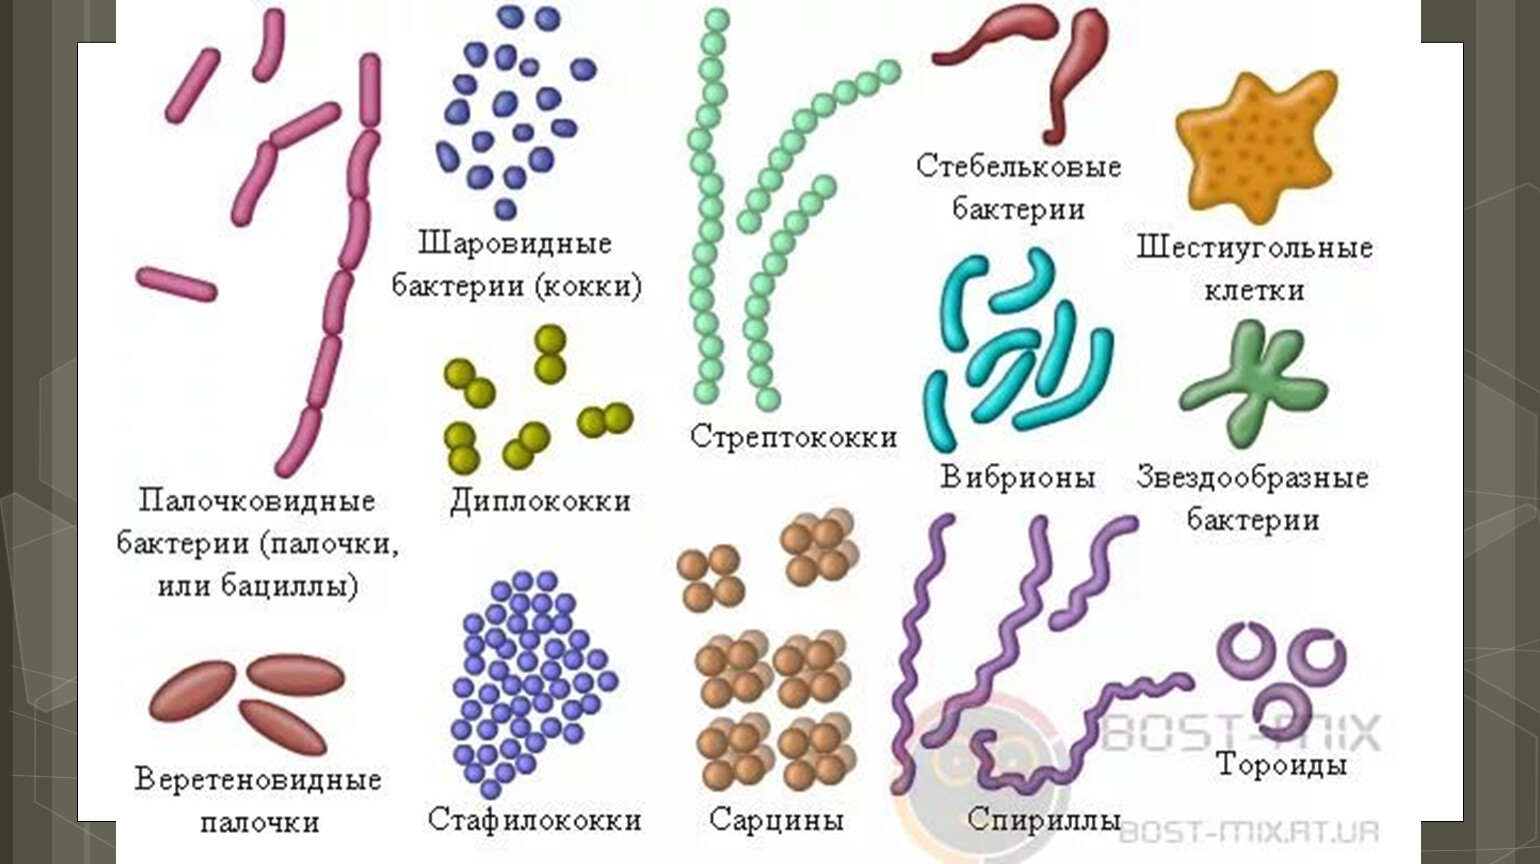 Бактерии человека название. Формы бактерий 9 класс биология. Бактерии названия 2 класс бациллы. Формы бактериальных клеток кокки. Формы бактерий (кокковидные, палочковидные, извитые)..